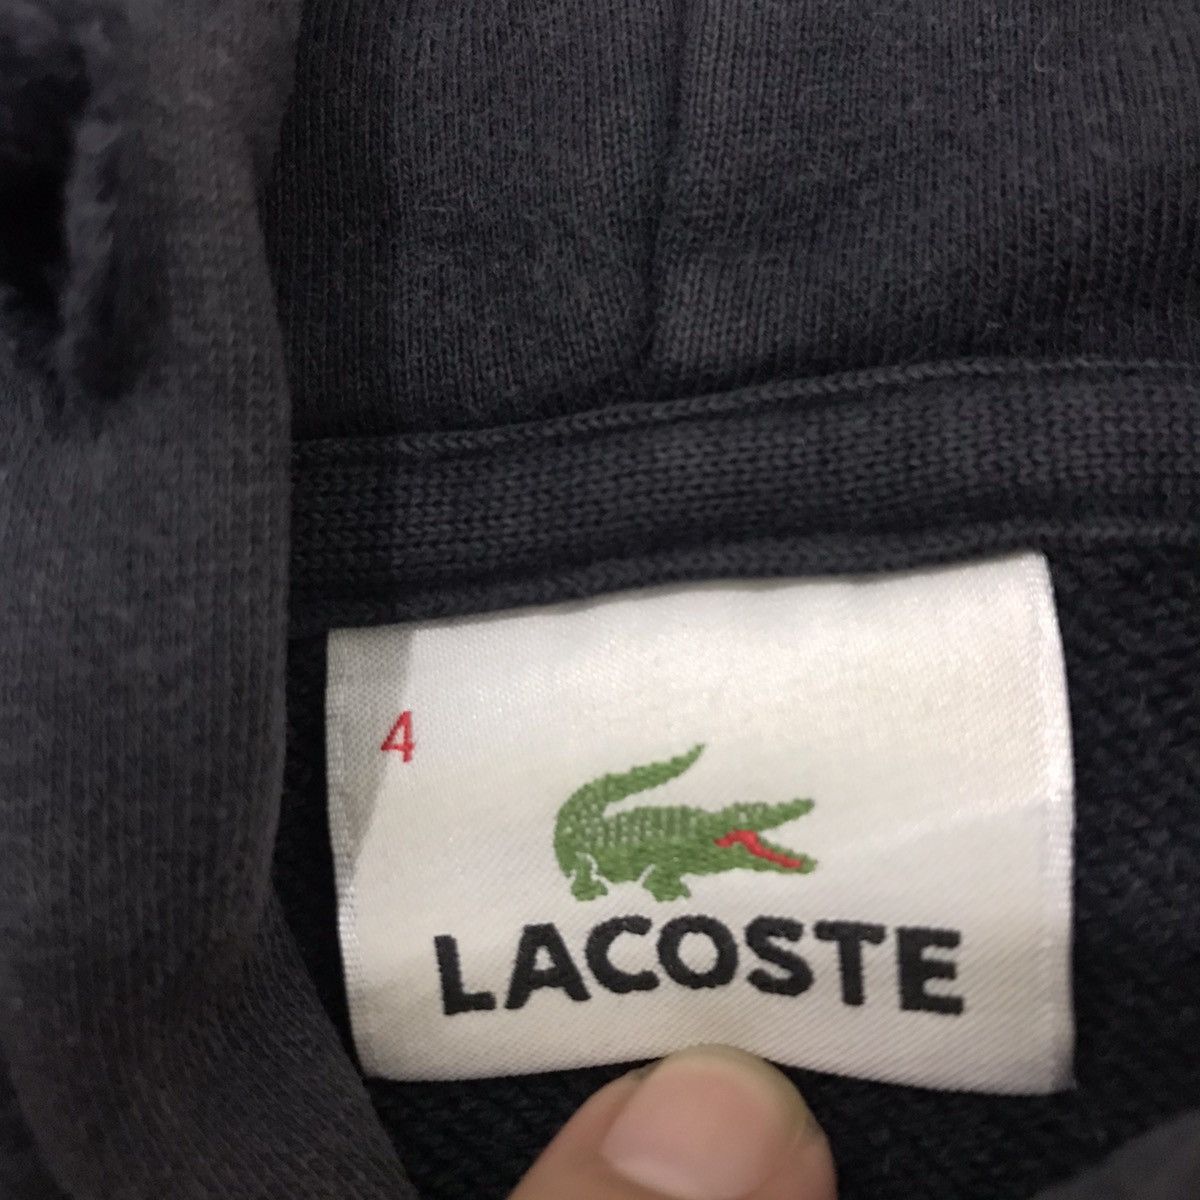 Lacoste Lacoste Big Logo Hoodie Sweatshirt Size US L / EU 52-54 / 3 - 4 Thumbnail